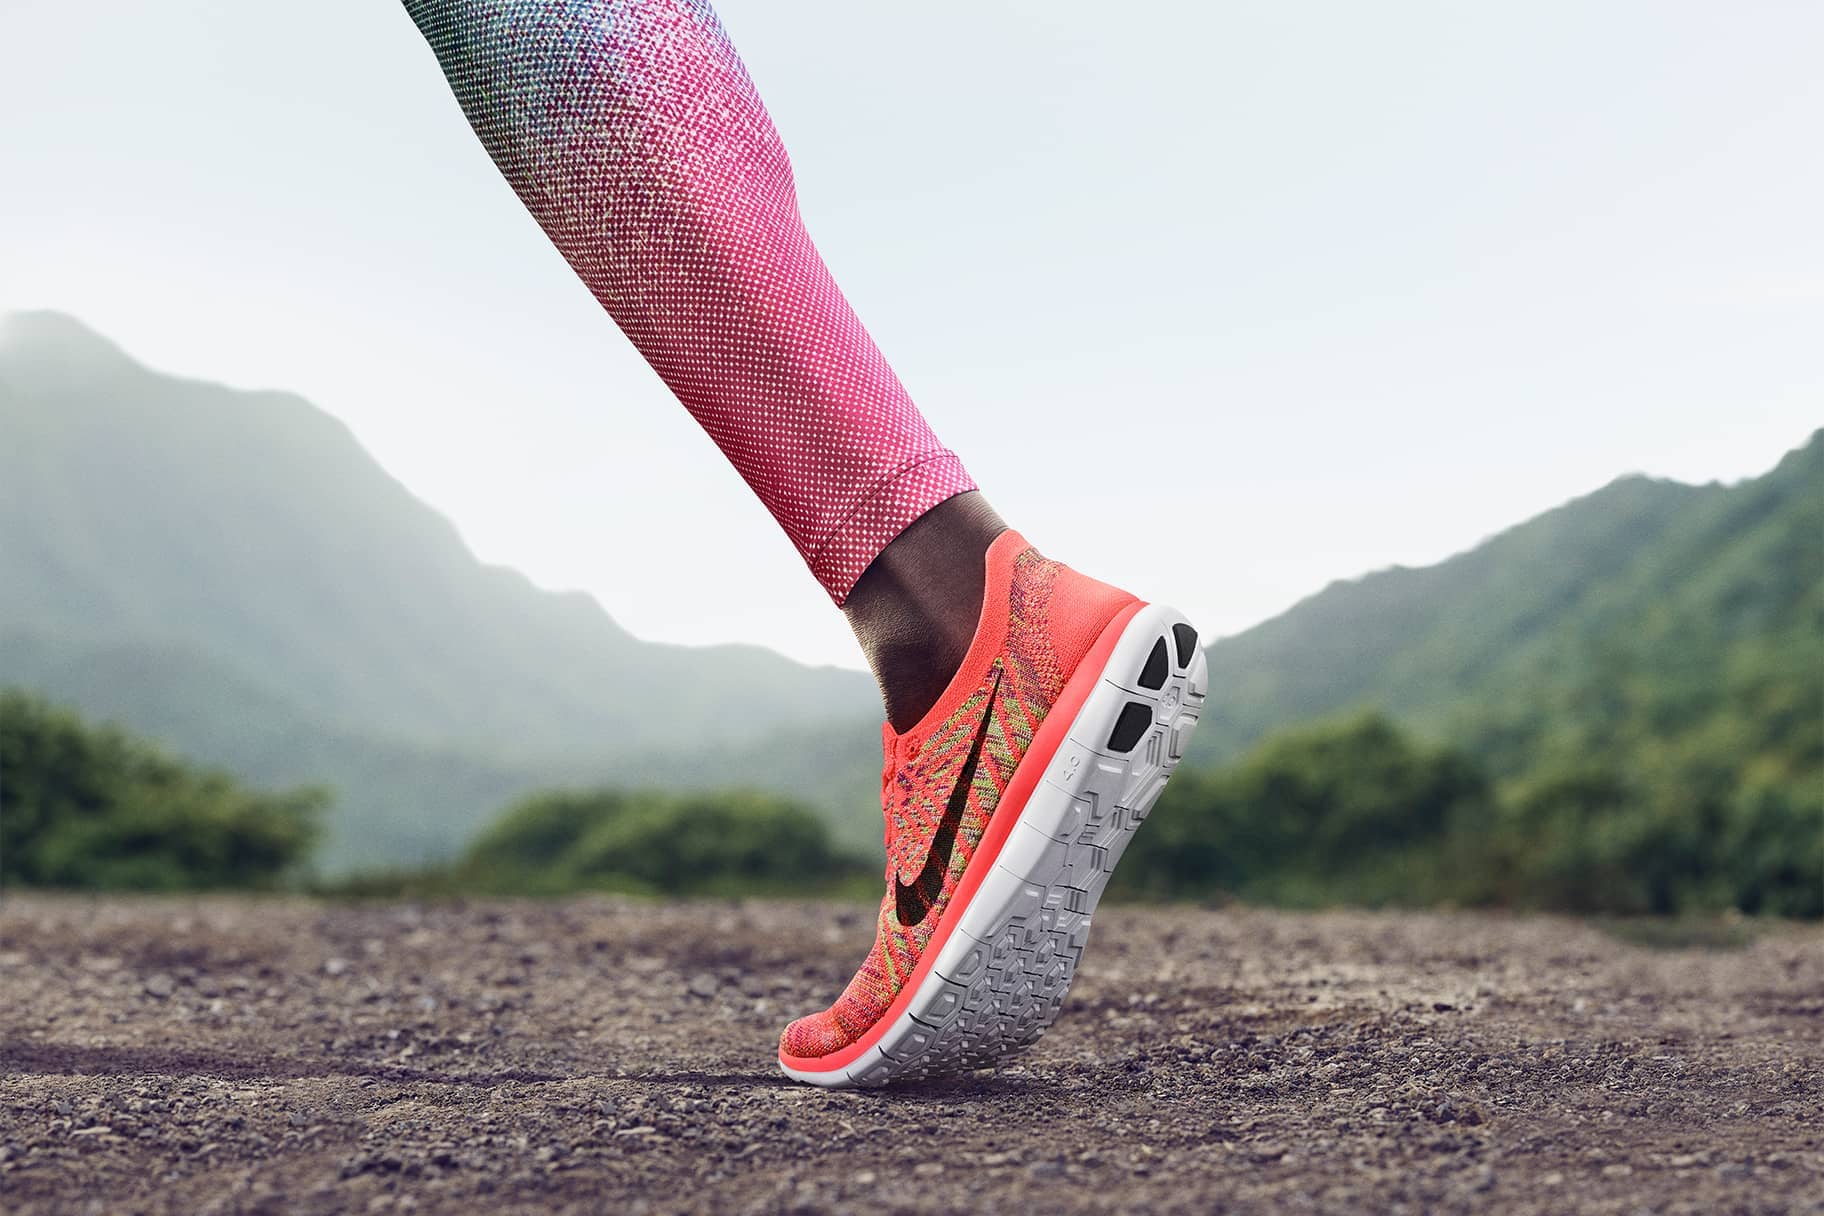 Bank Mijnwerker Inpakken Tips for Buying Minimalist Barefoot Running Shoes. Nike.com